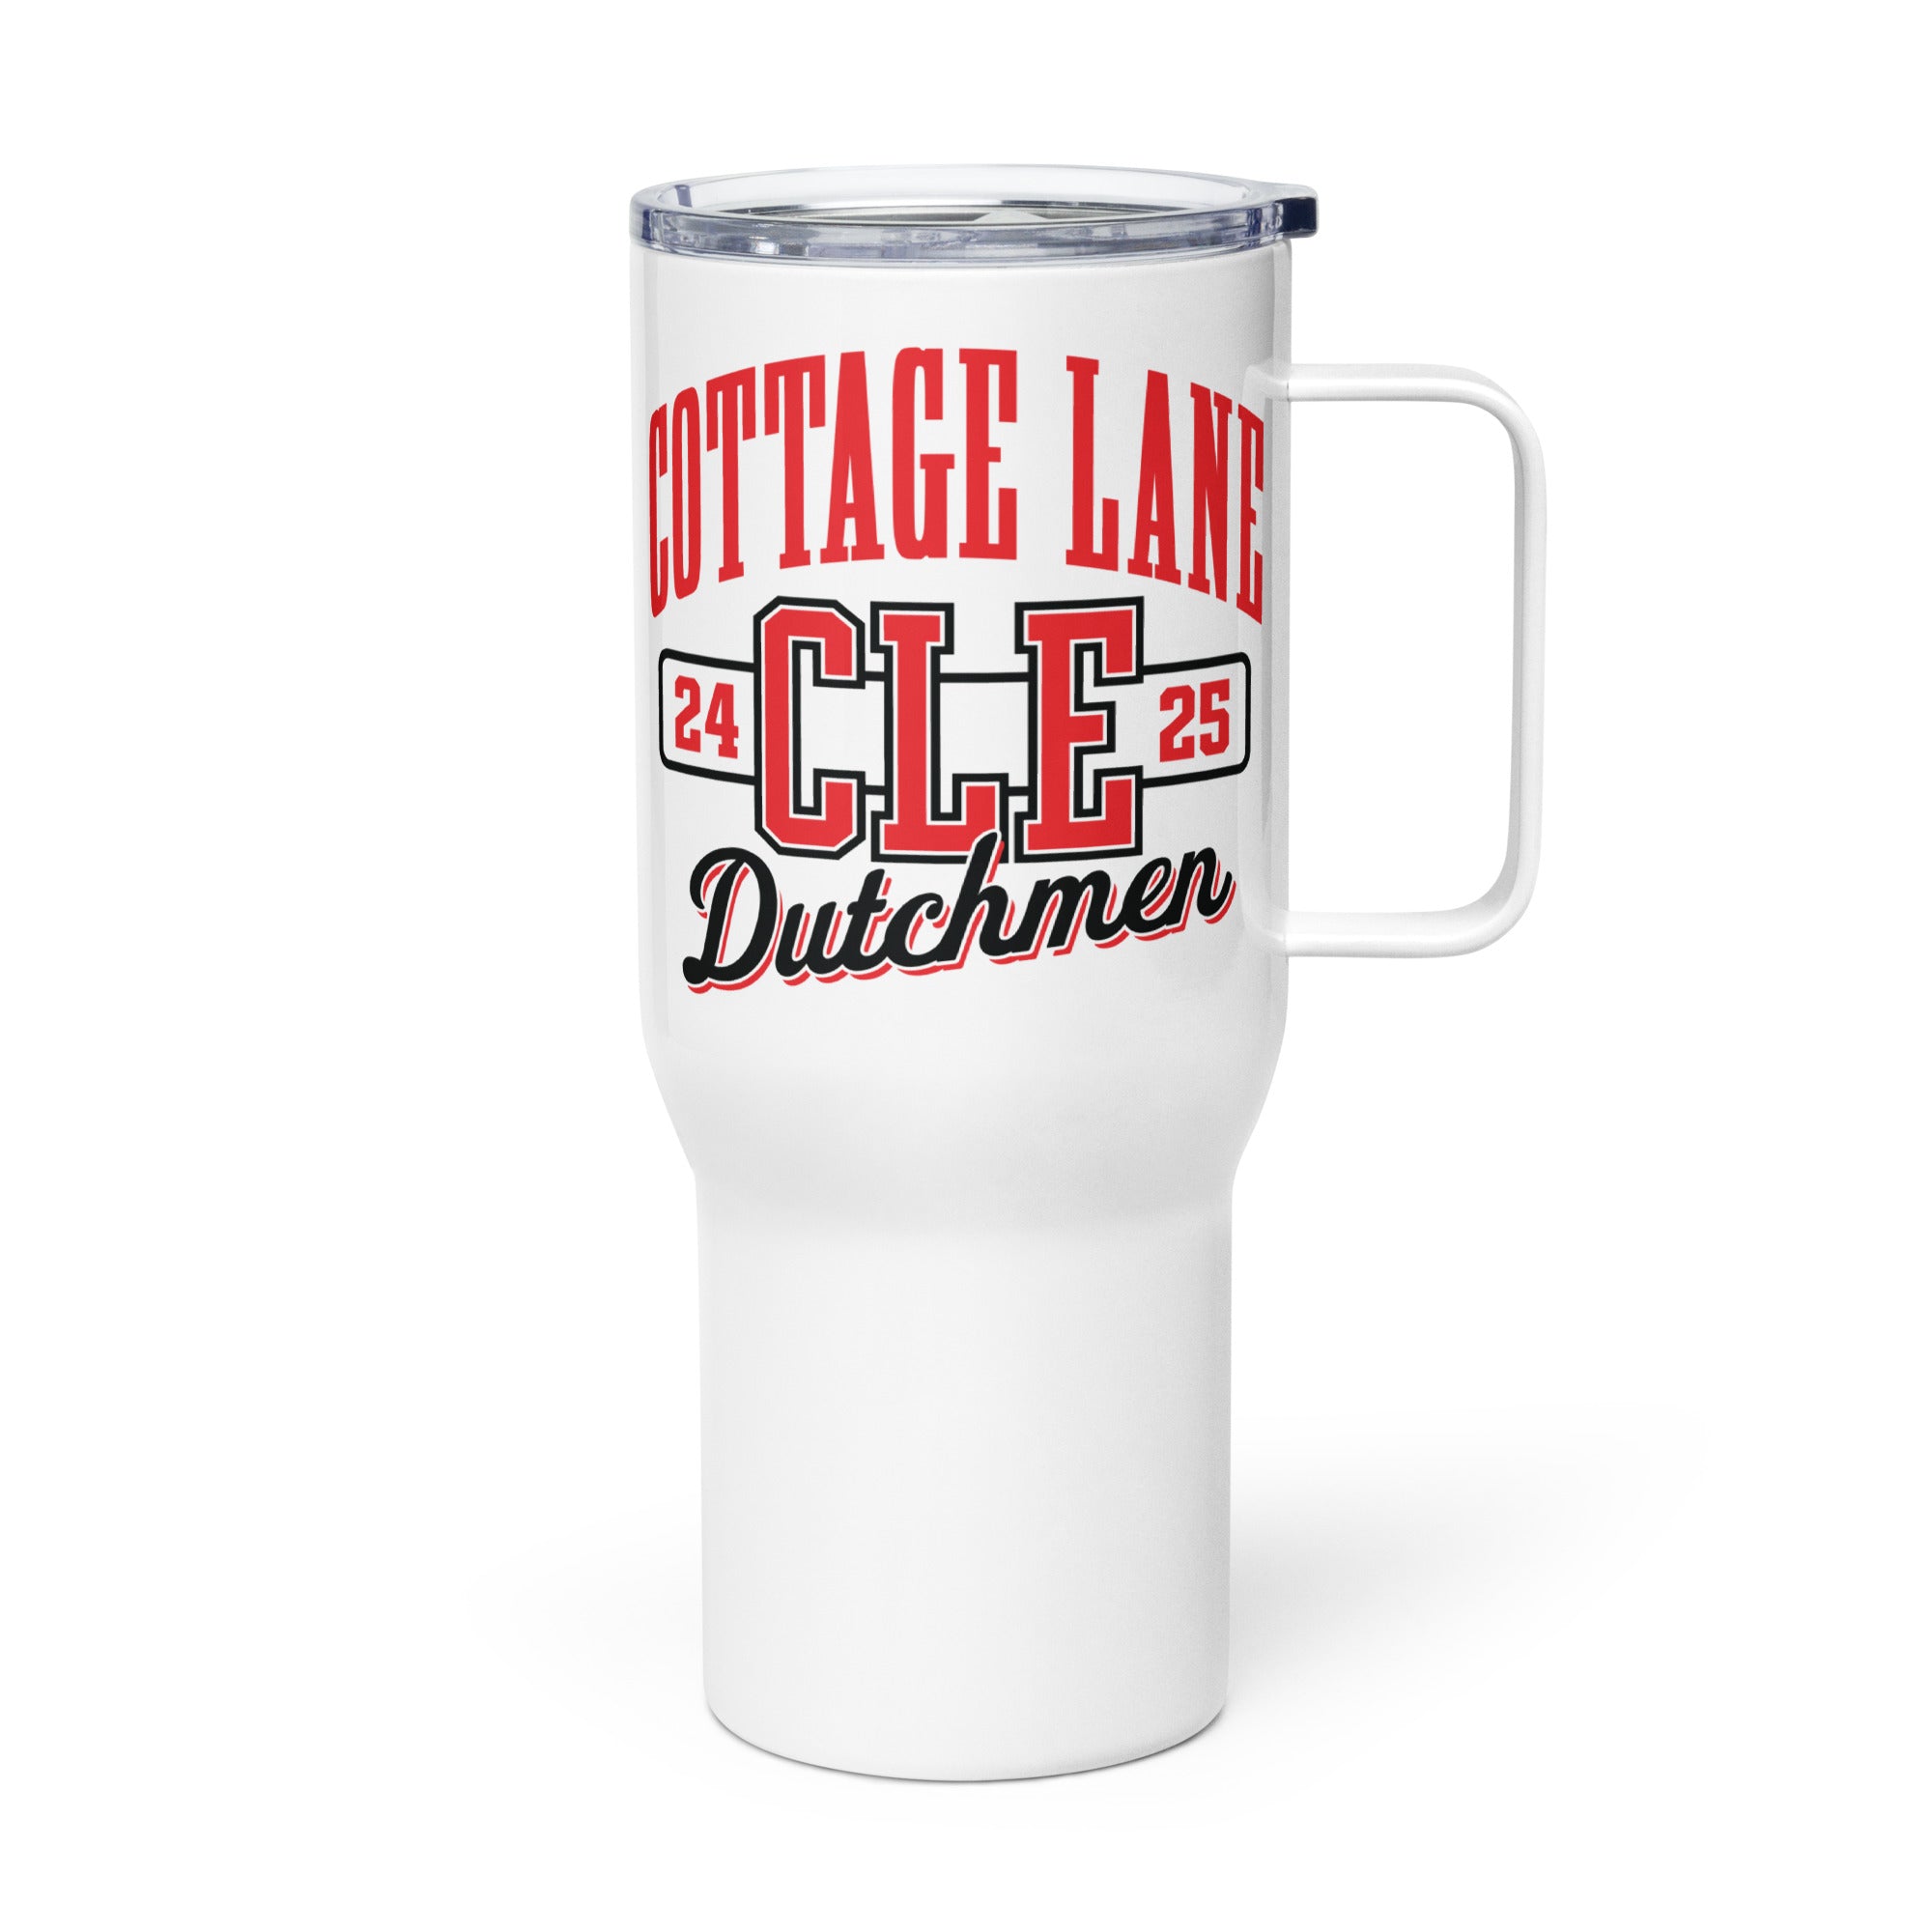 Cottage Lane Elementary Travel mug with a handle